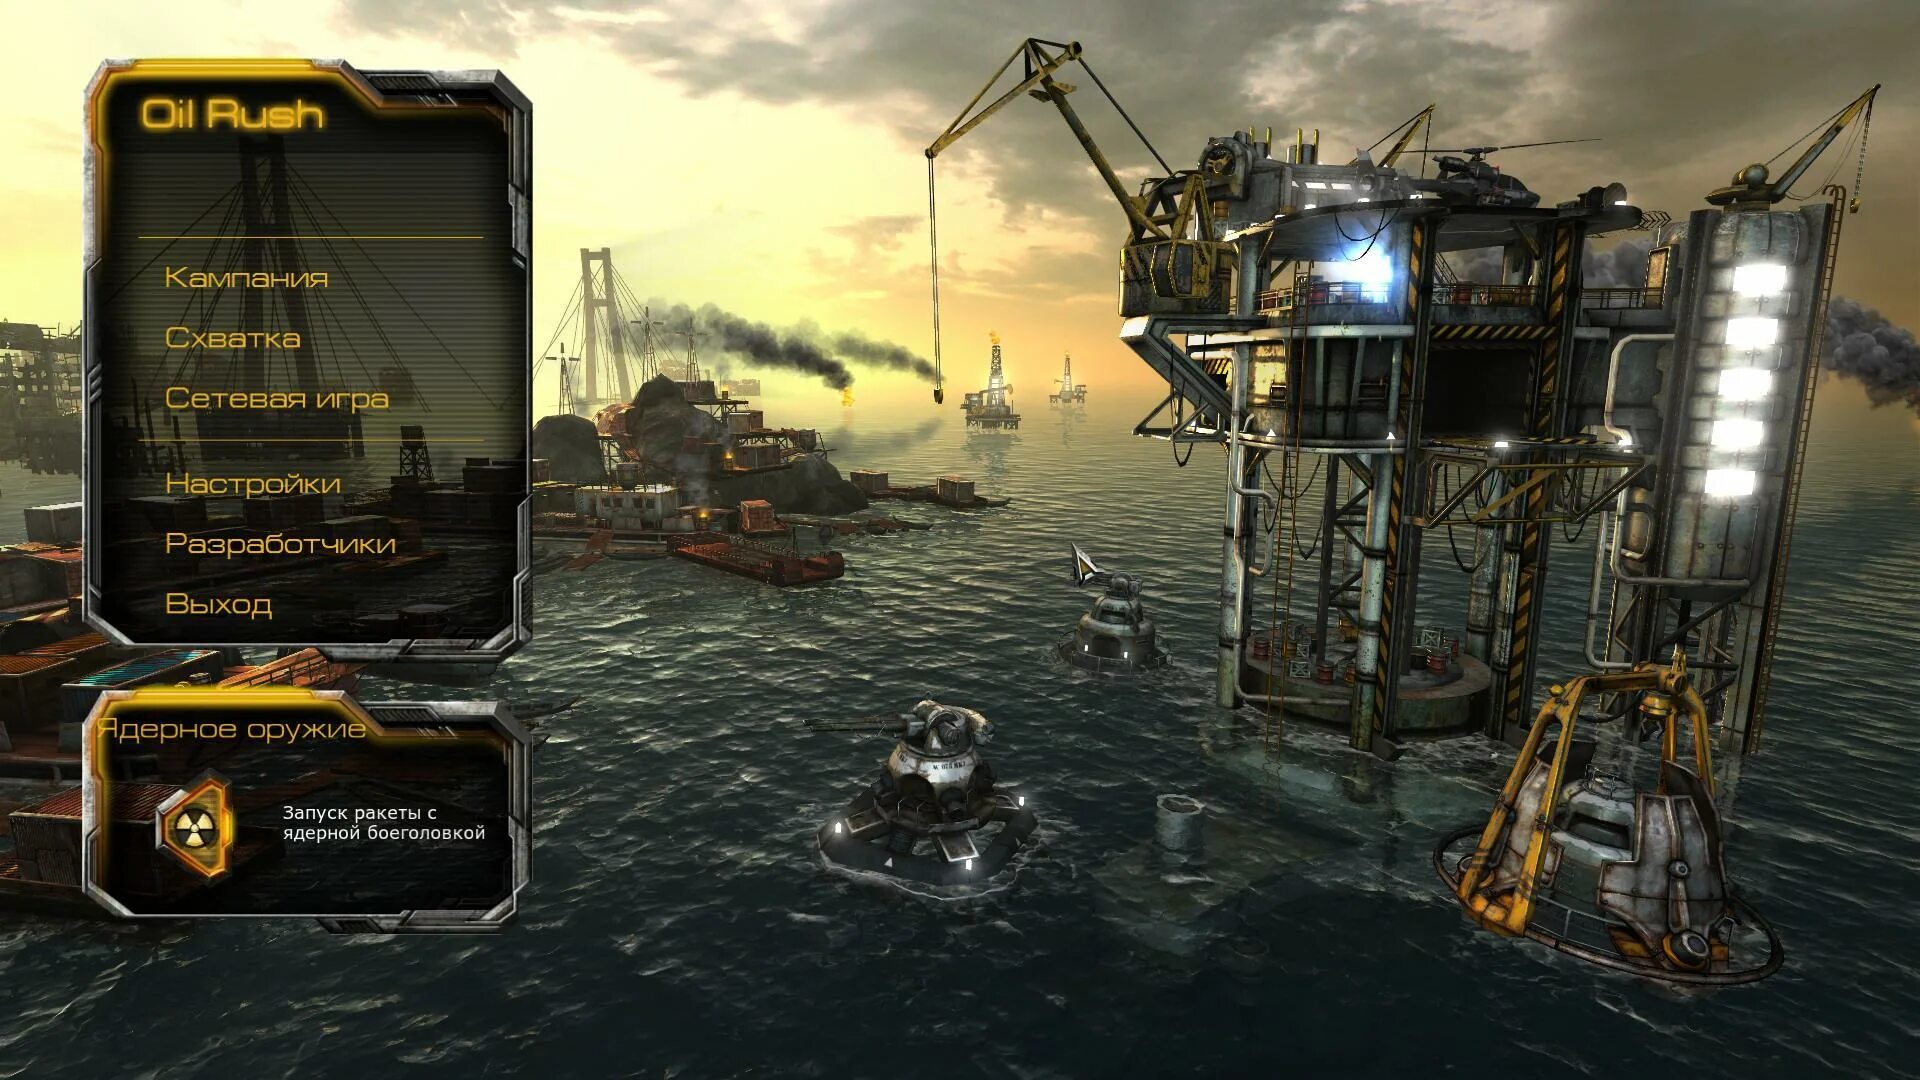 Игра Oil Rush. Oil Rush 3d Naval Strategy. Oil Rush 2. Игра Водный мир.